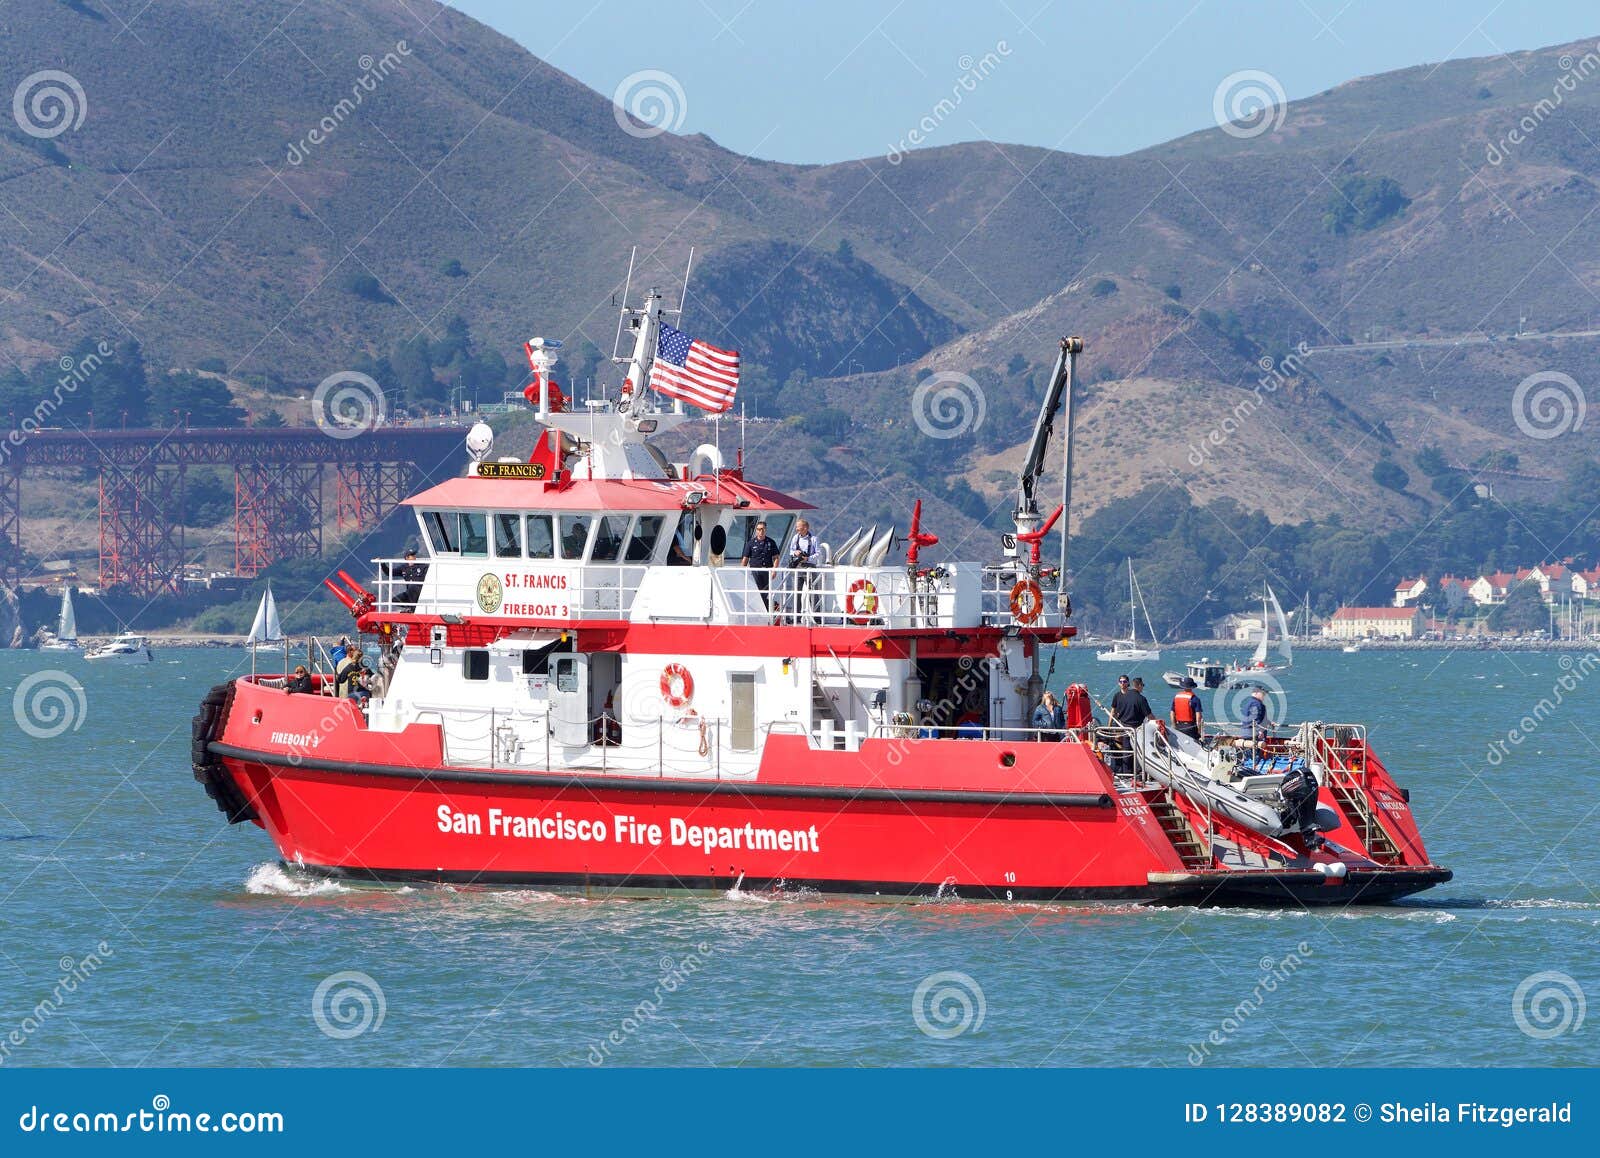 Fire Boat California San Francisco Fire Department the Phoenix Fireboat Marine